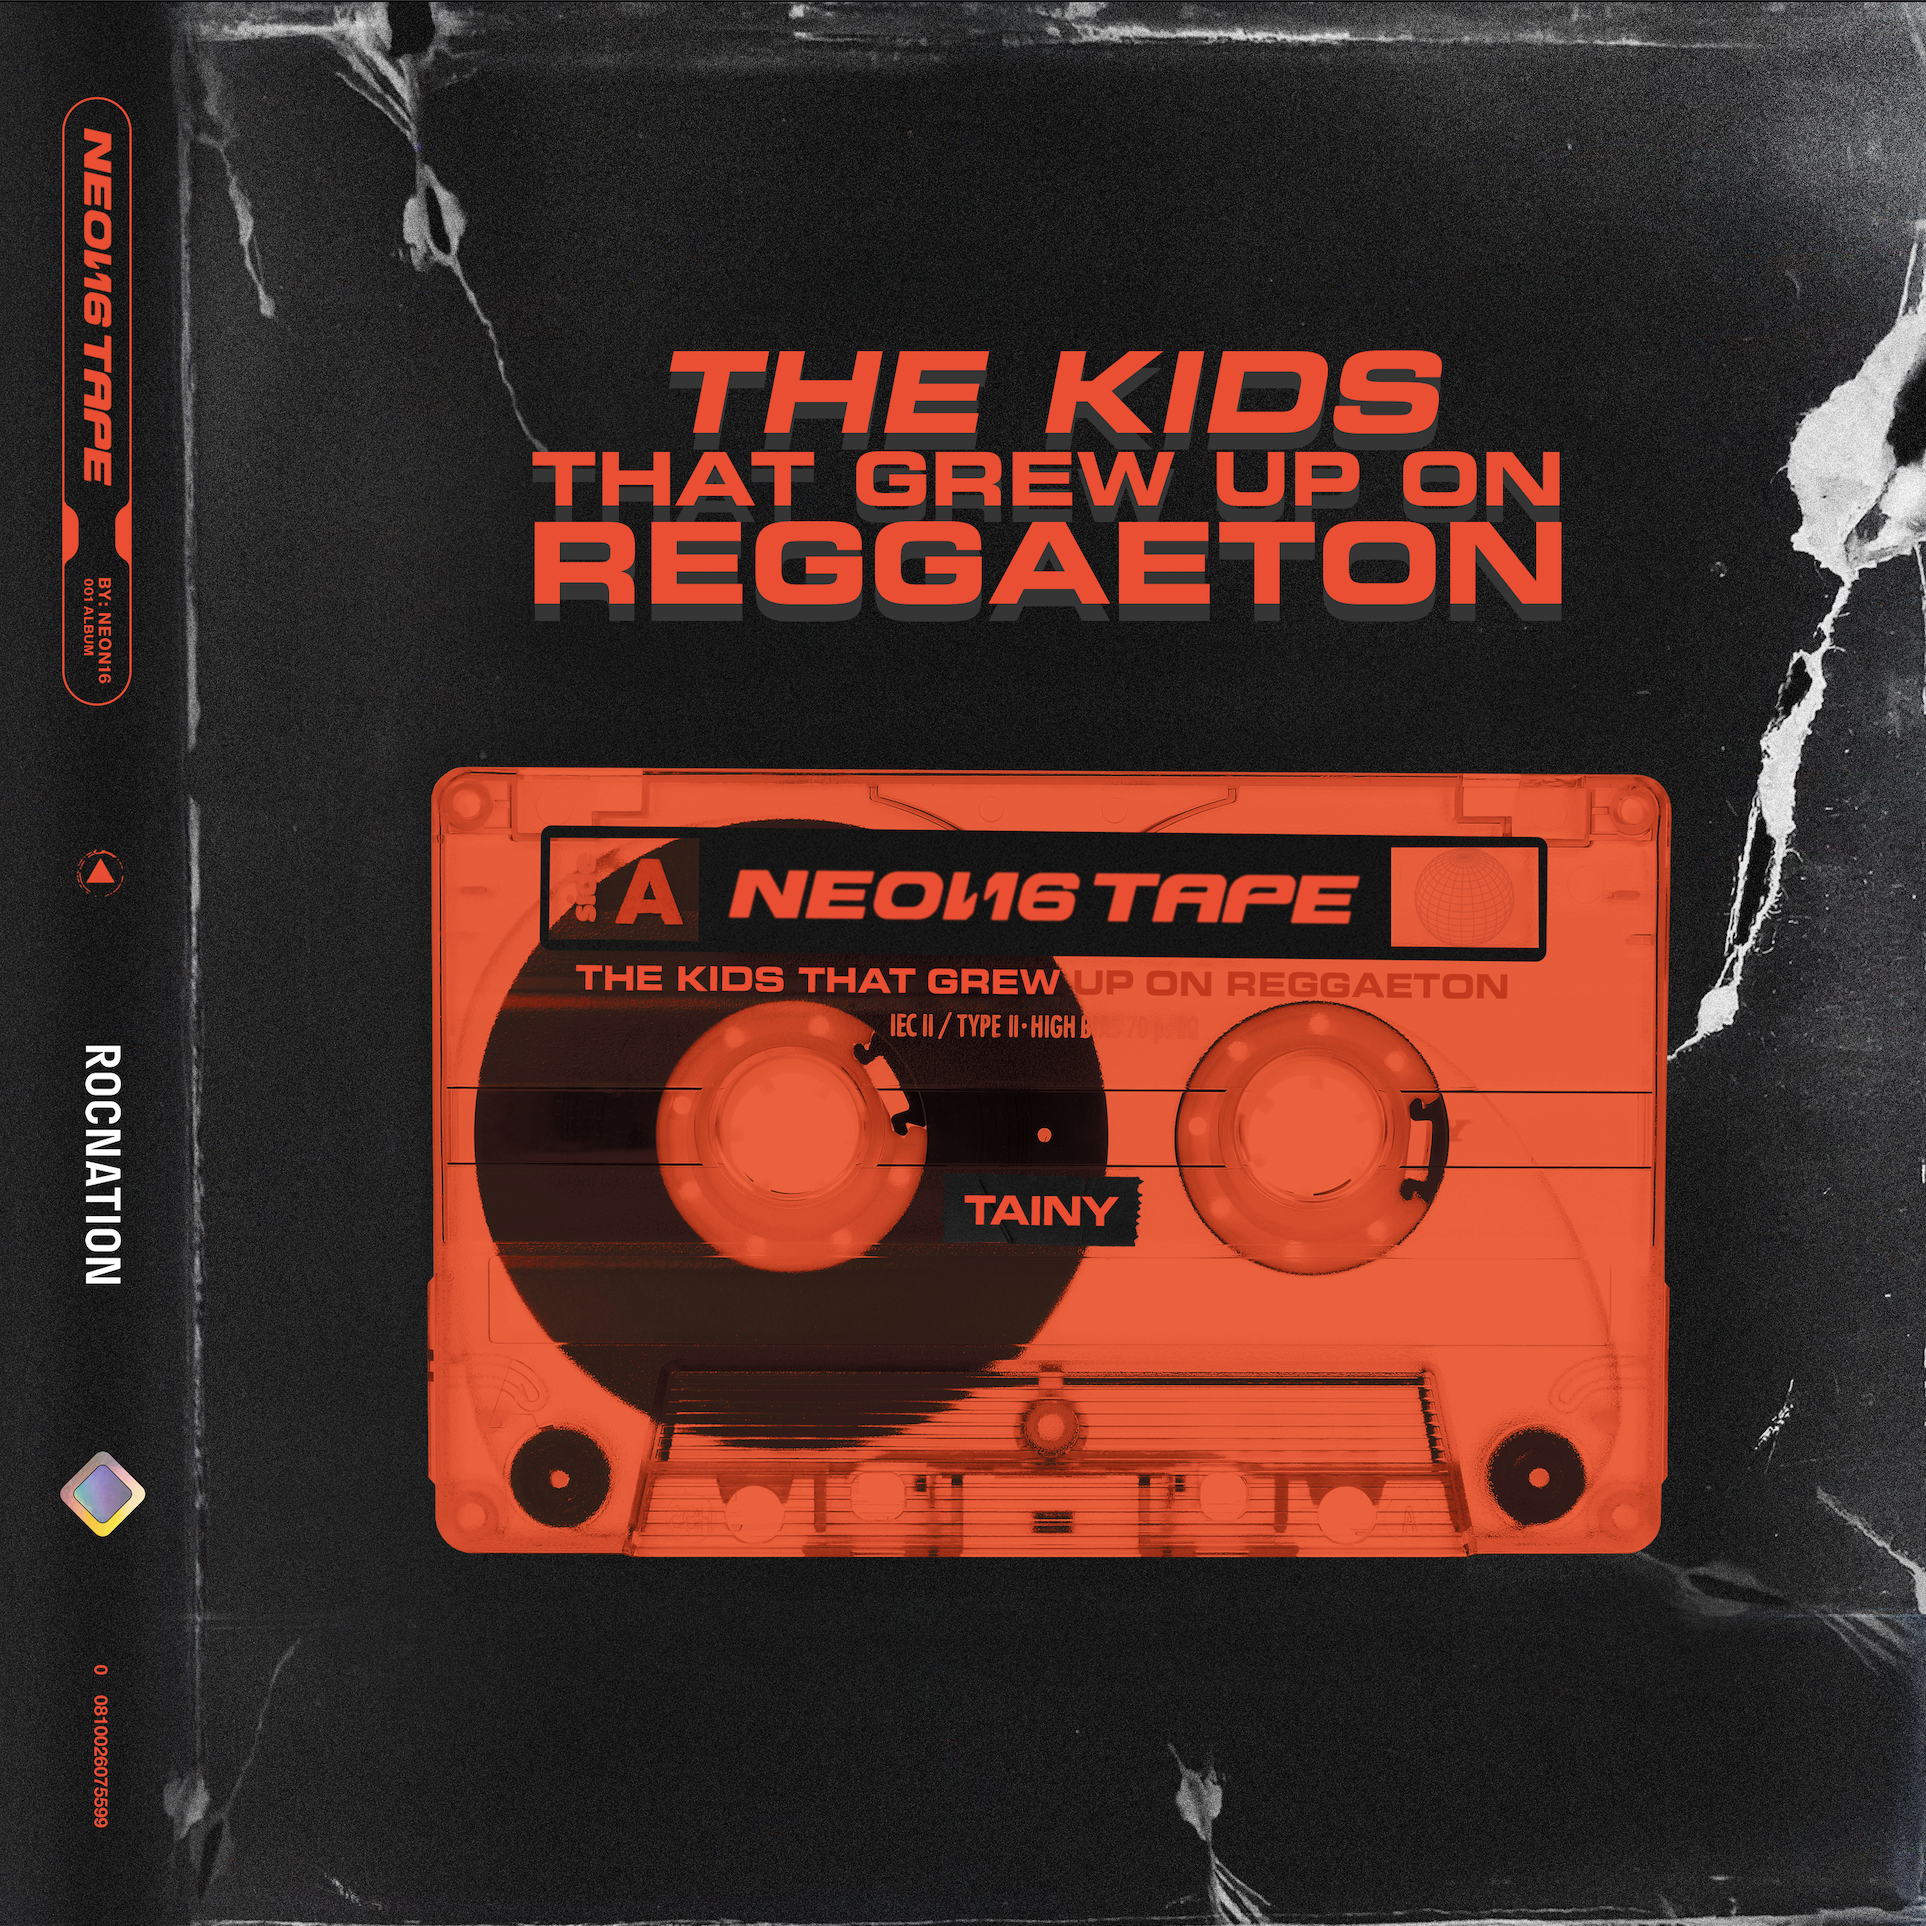 TAINY lanza “NEON16 Tape: The Kids That Grew Up On Reggaeton”